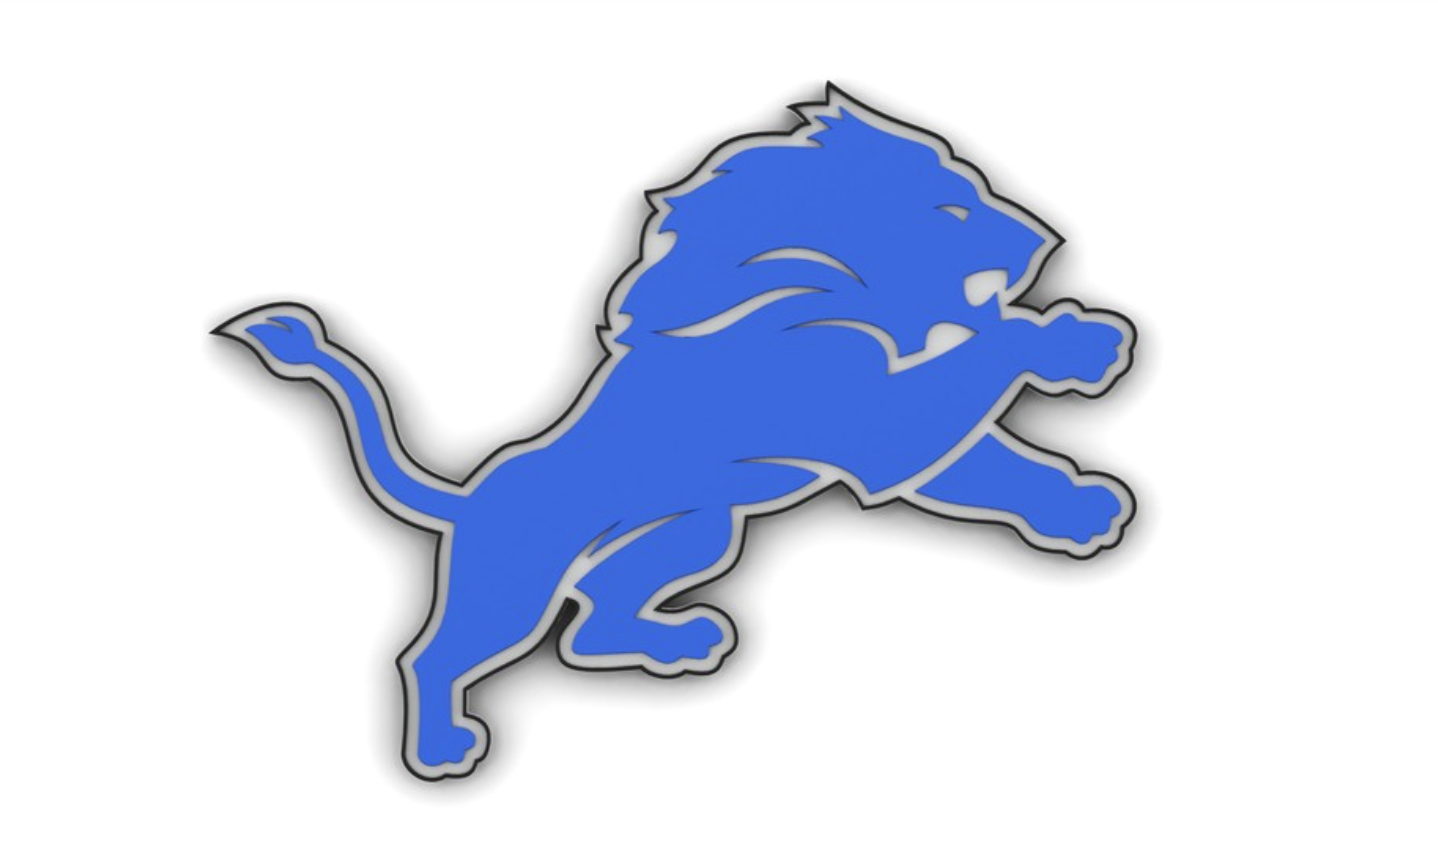 Matt Nelson signs with New York Giants Detroit Lions landing Detroit Lions select